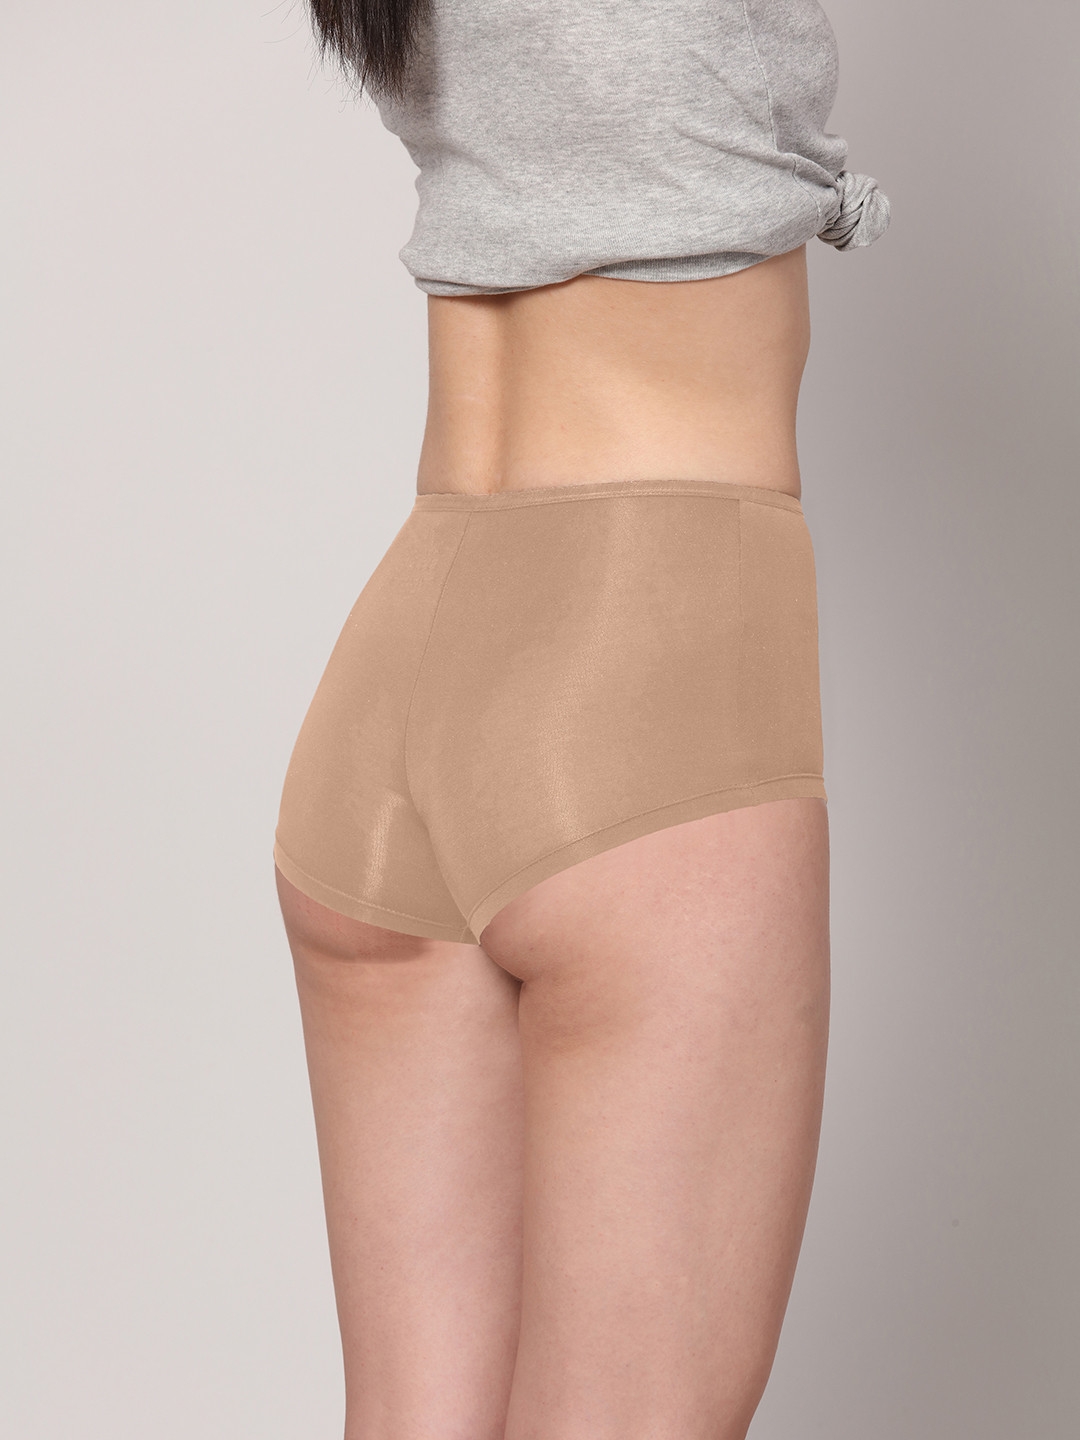 AshleyandAlvis Women's Panties Micro Modal, Anti Bacterial, Skinny Soft,  Premium Boys Leg -No Itching, Sweat Proof, Double In-seam Gusset 